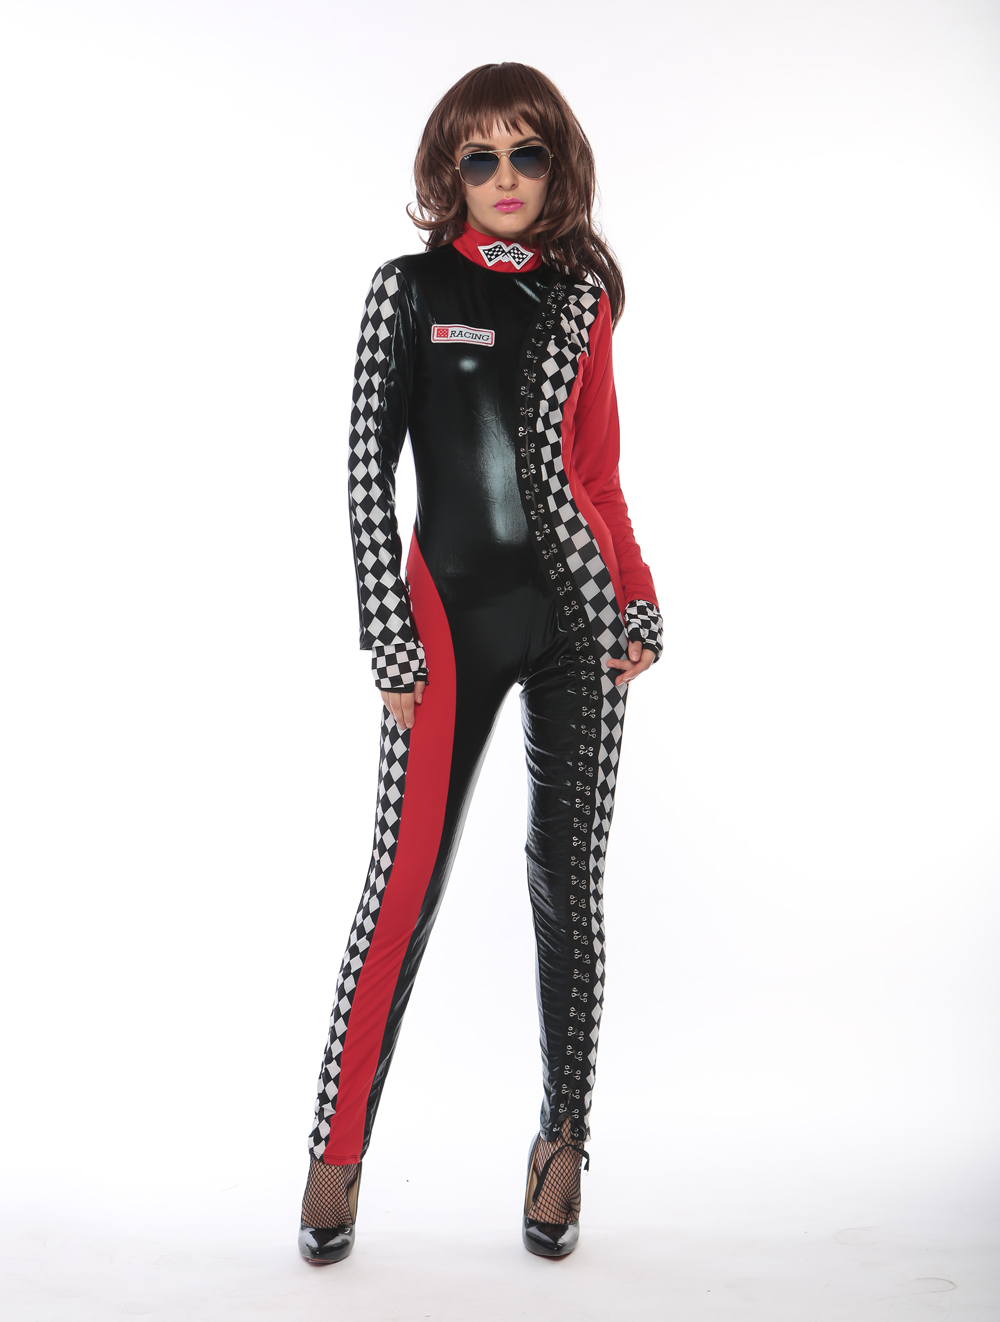 F1723 sexy race girl costume